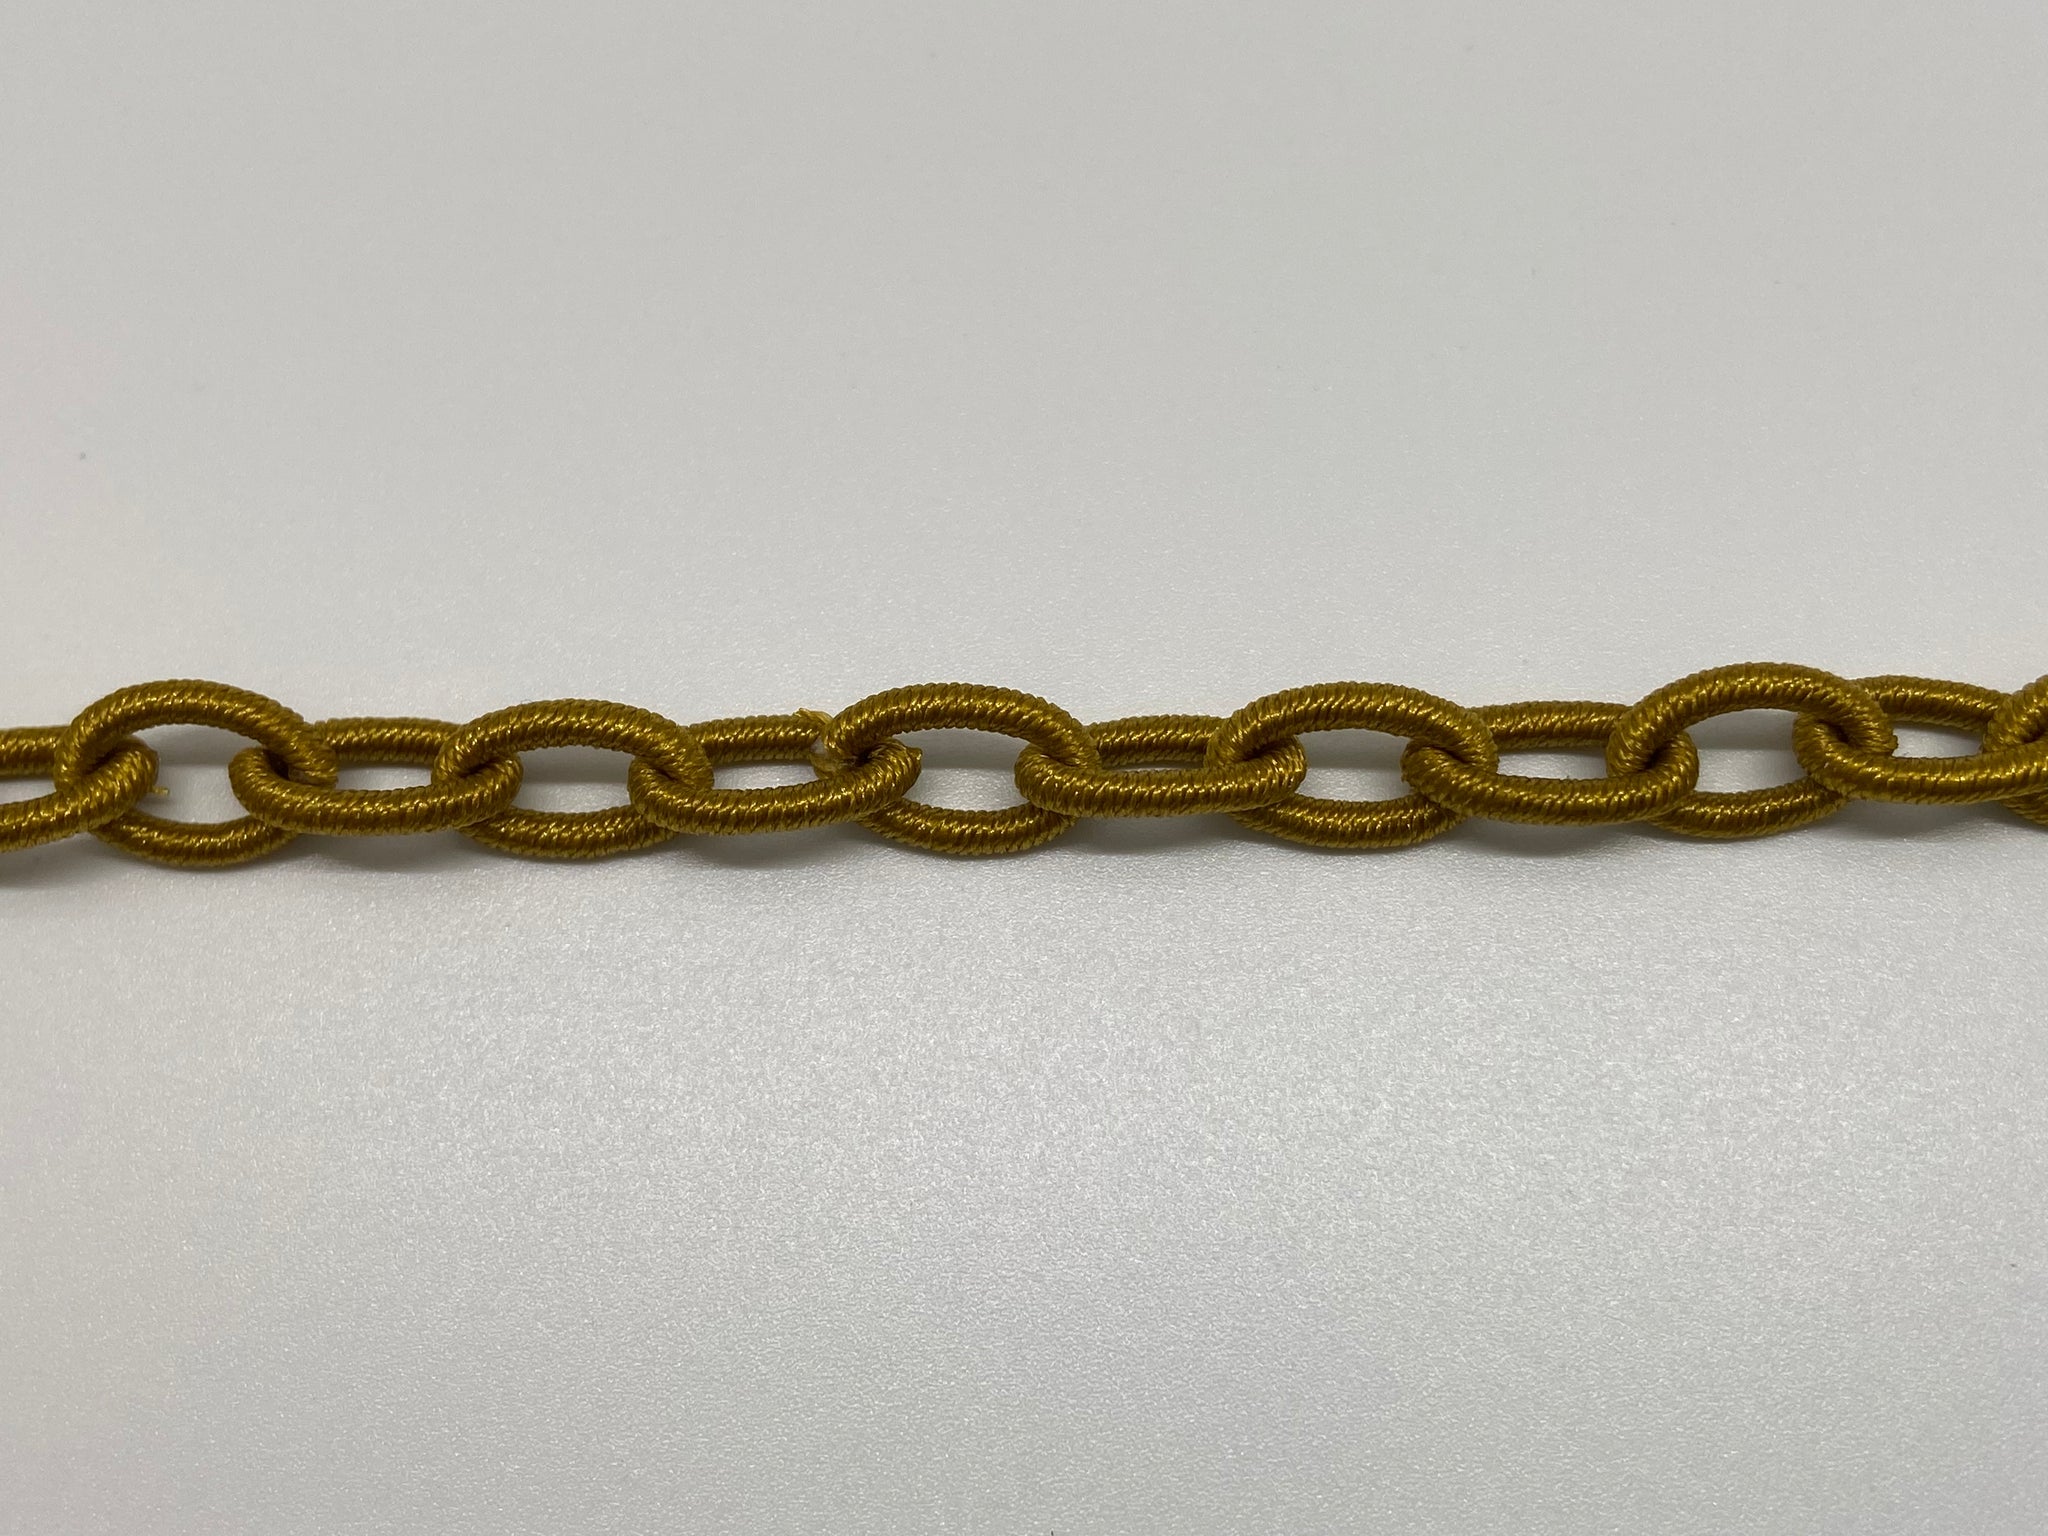 Nylon Chain Bracelet